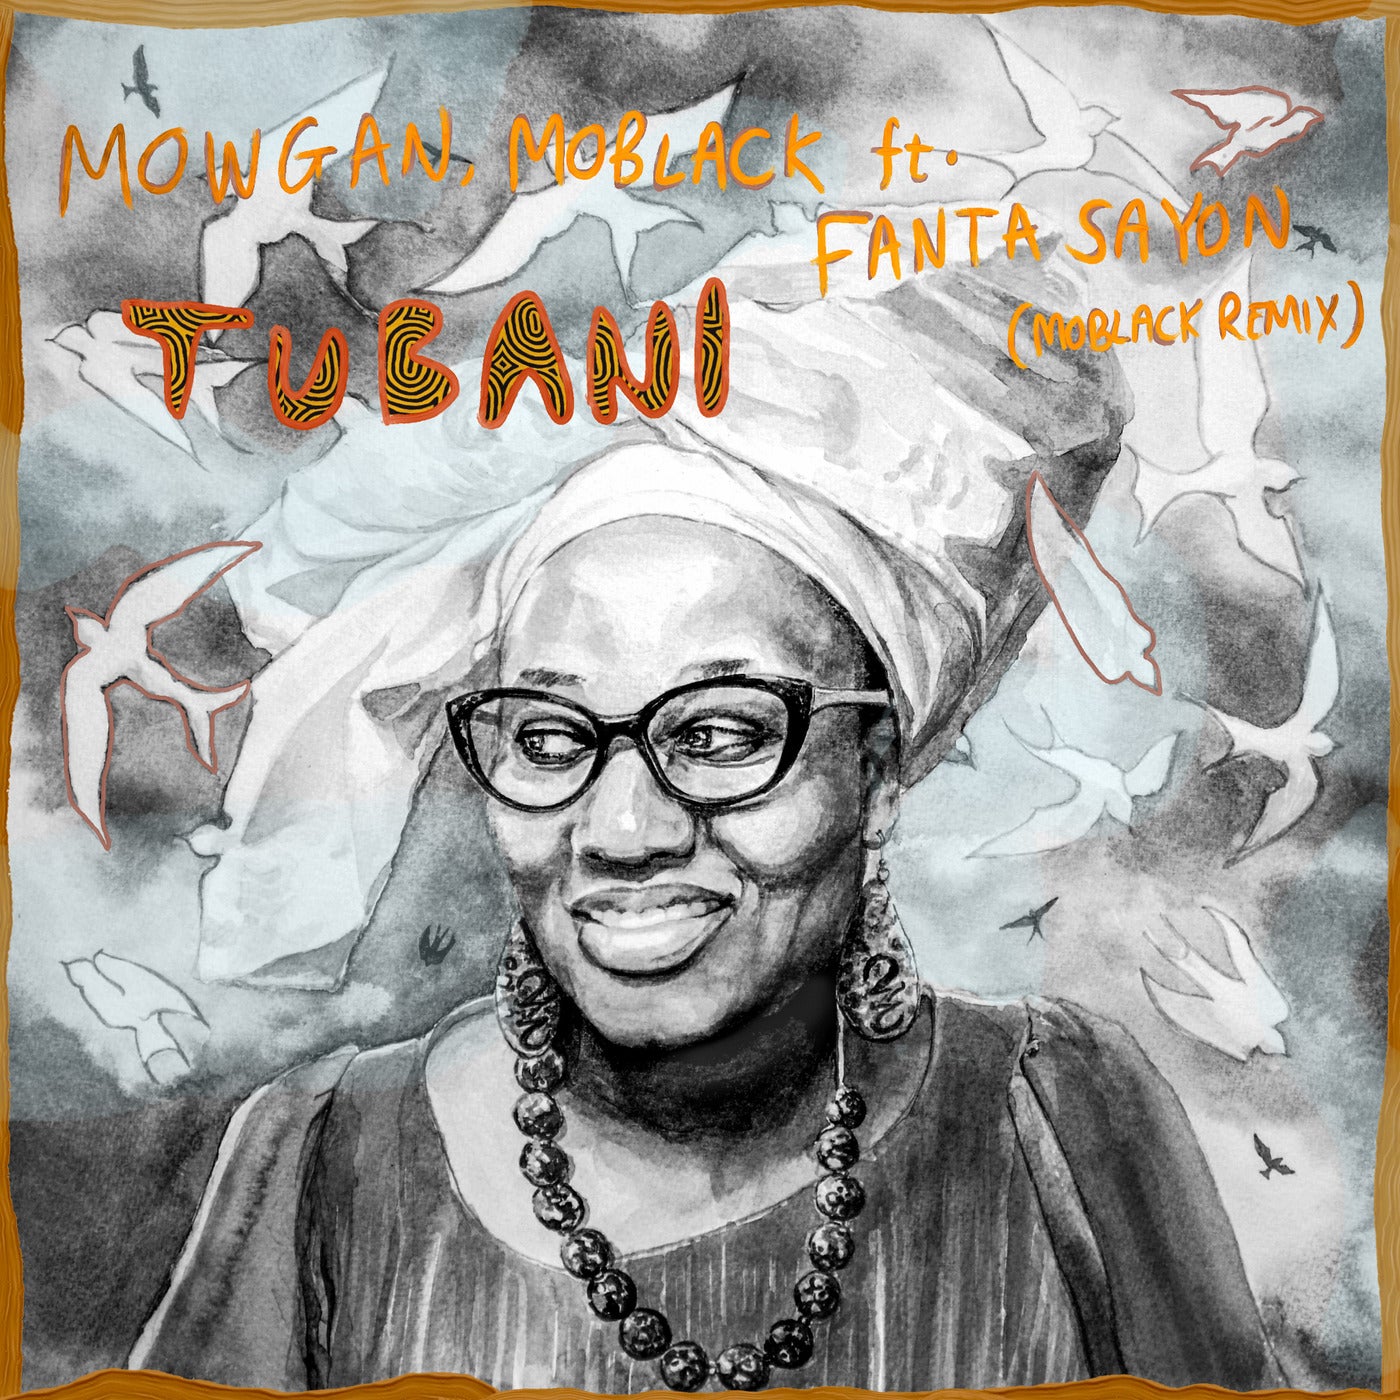 image cover: Mowgan, Fanta Sayon - Tubani (MoBlack Remix) / MBR453